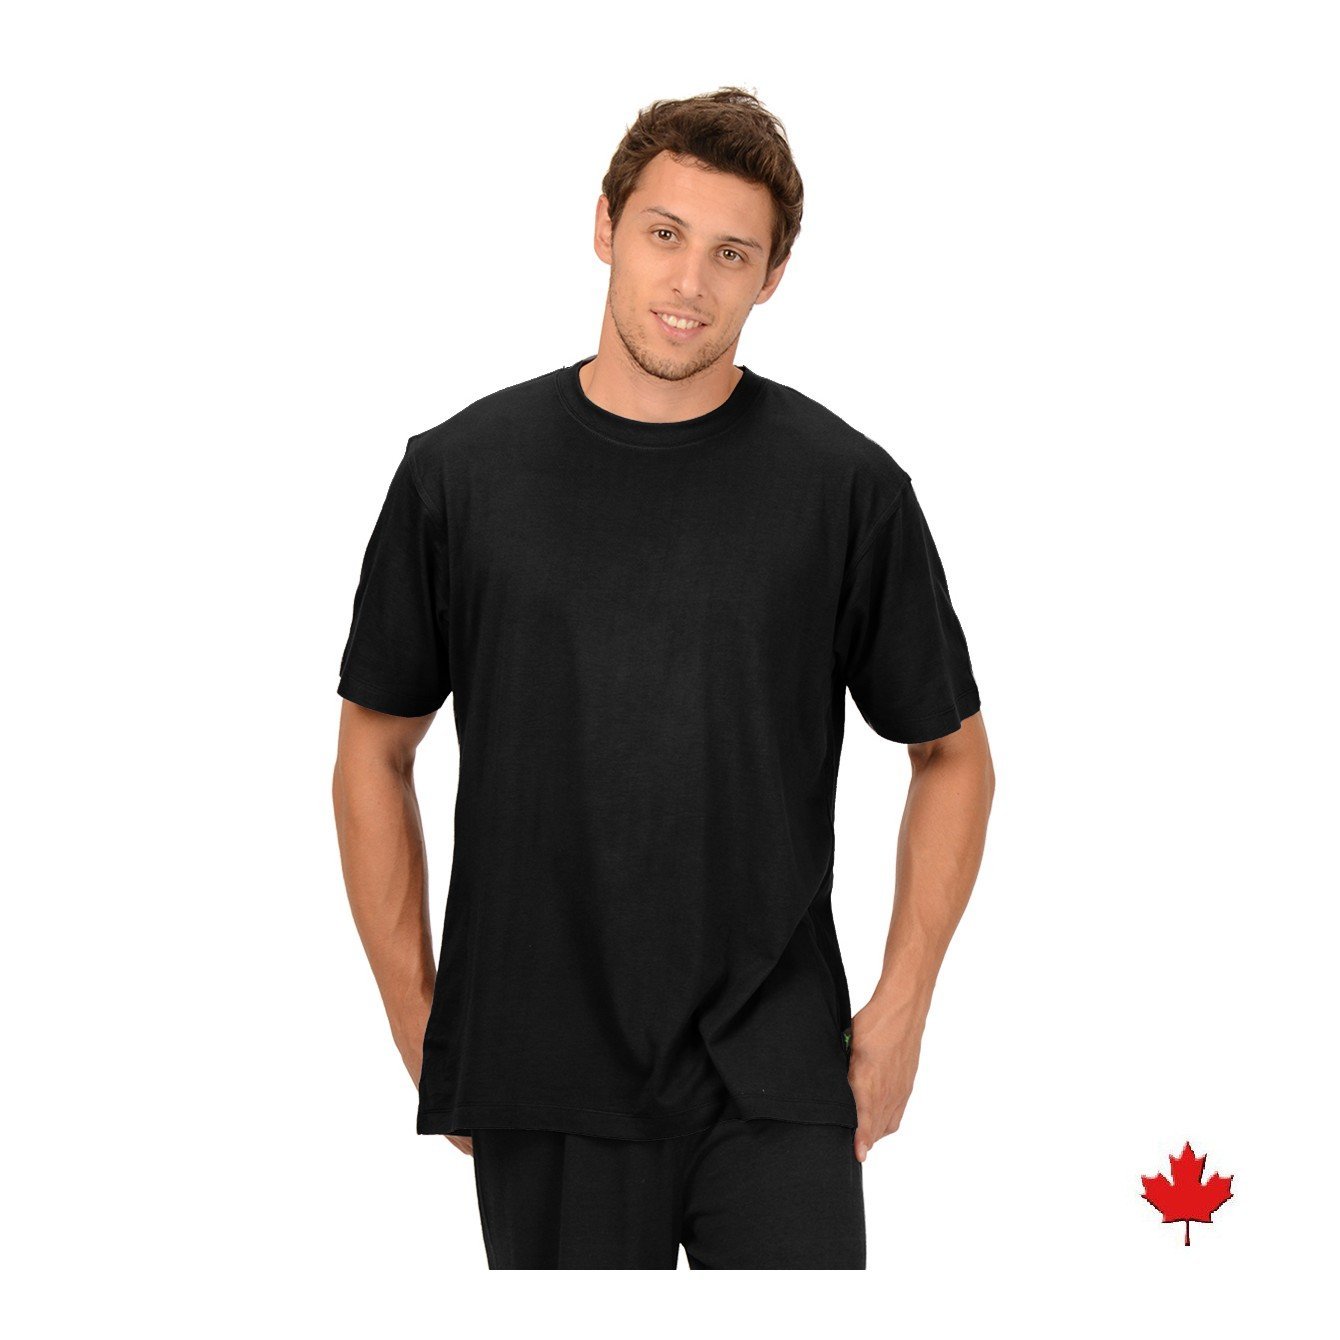 Urban Bamboo T-Shirt – Naturally Canada